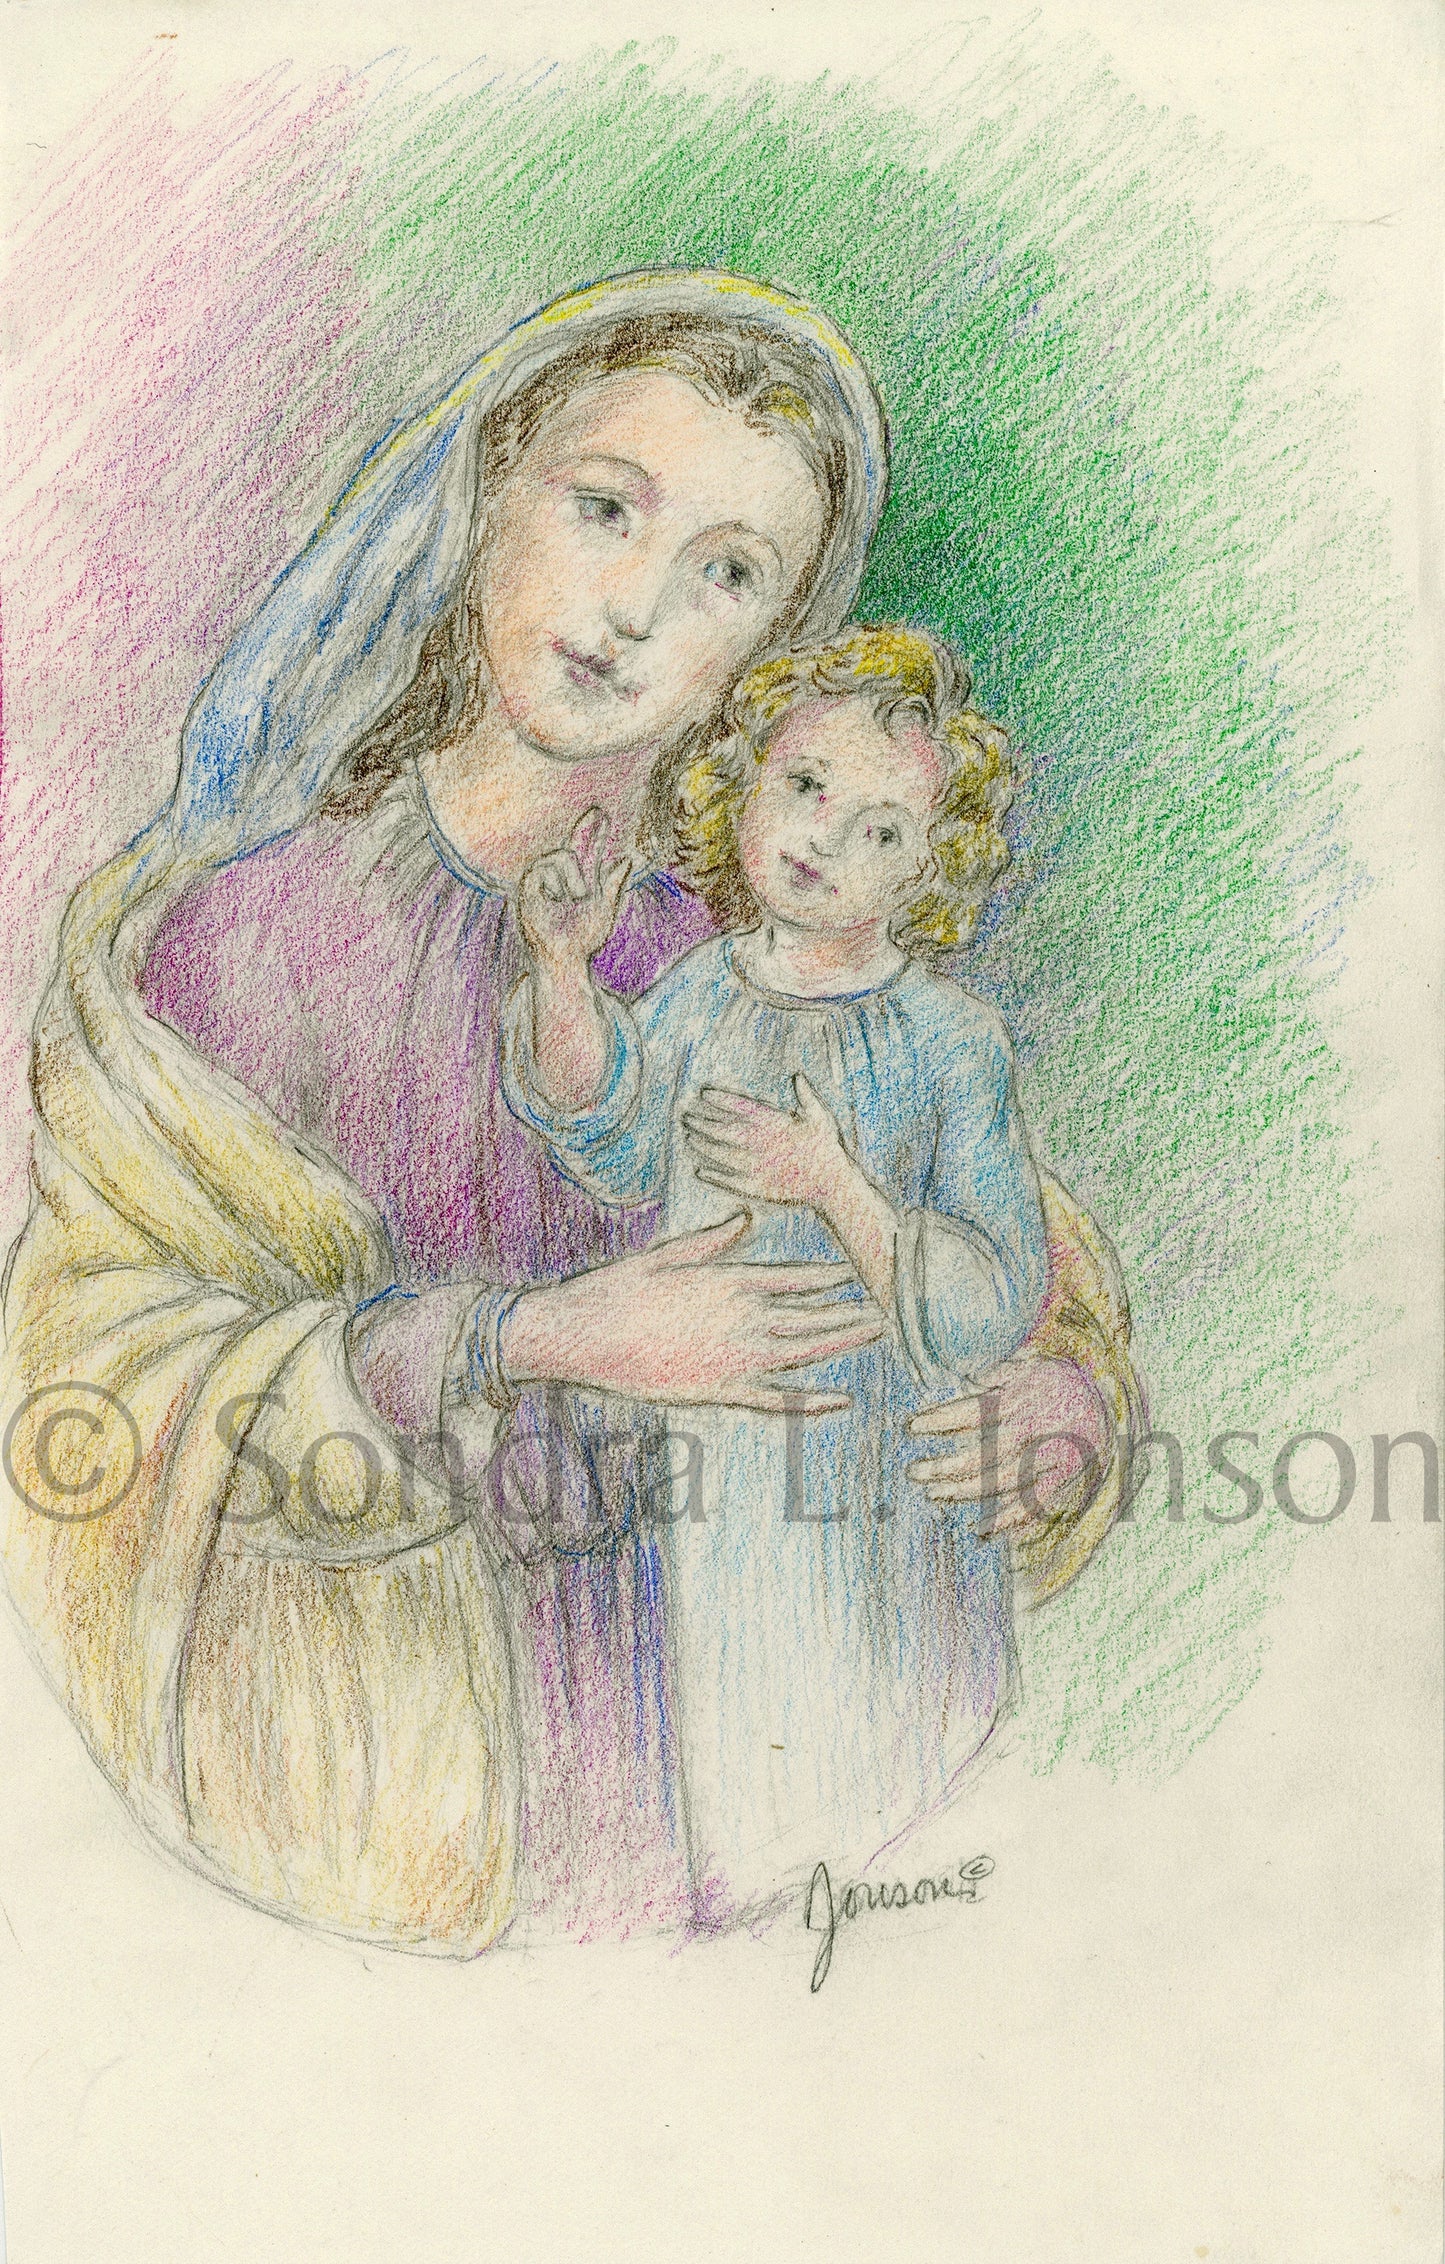 Mother and Child - Sondra Jonson Catholic Art Print